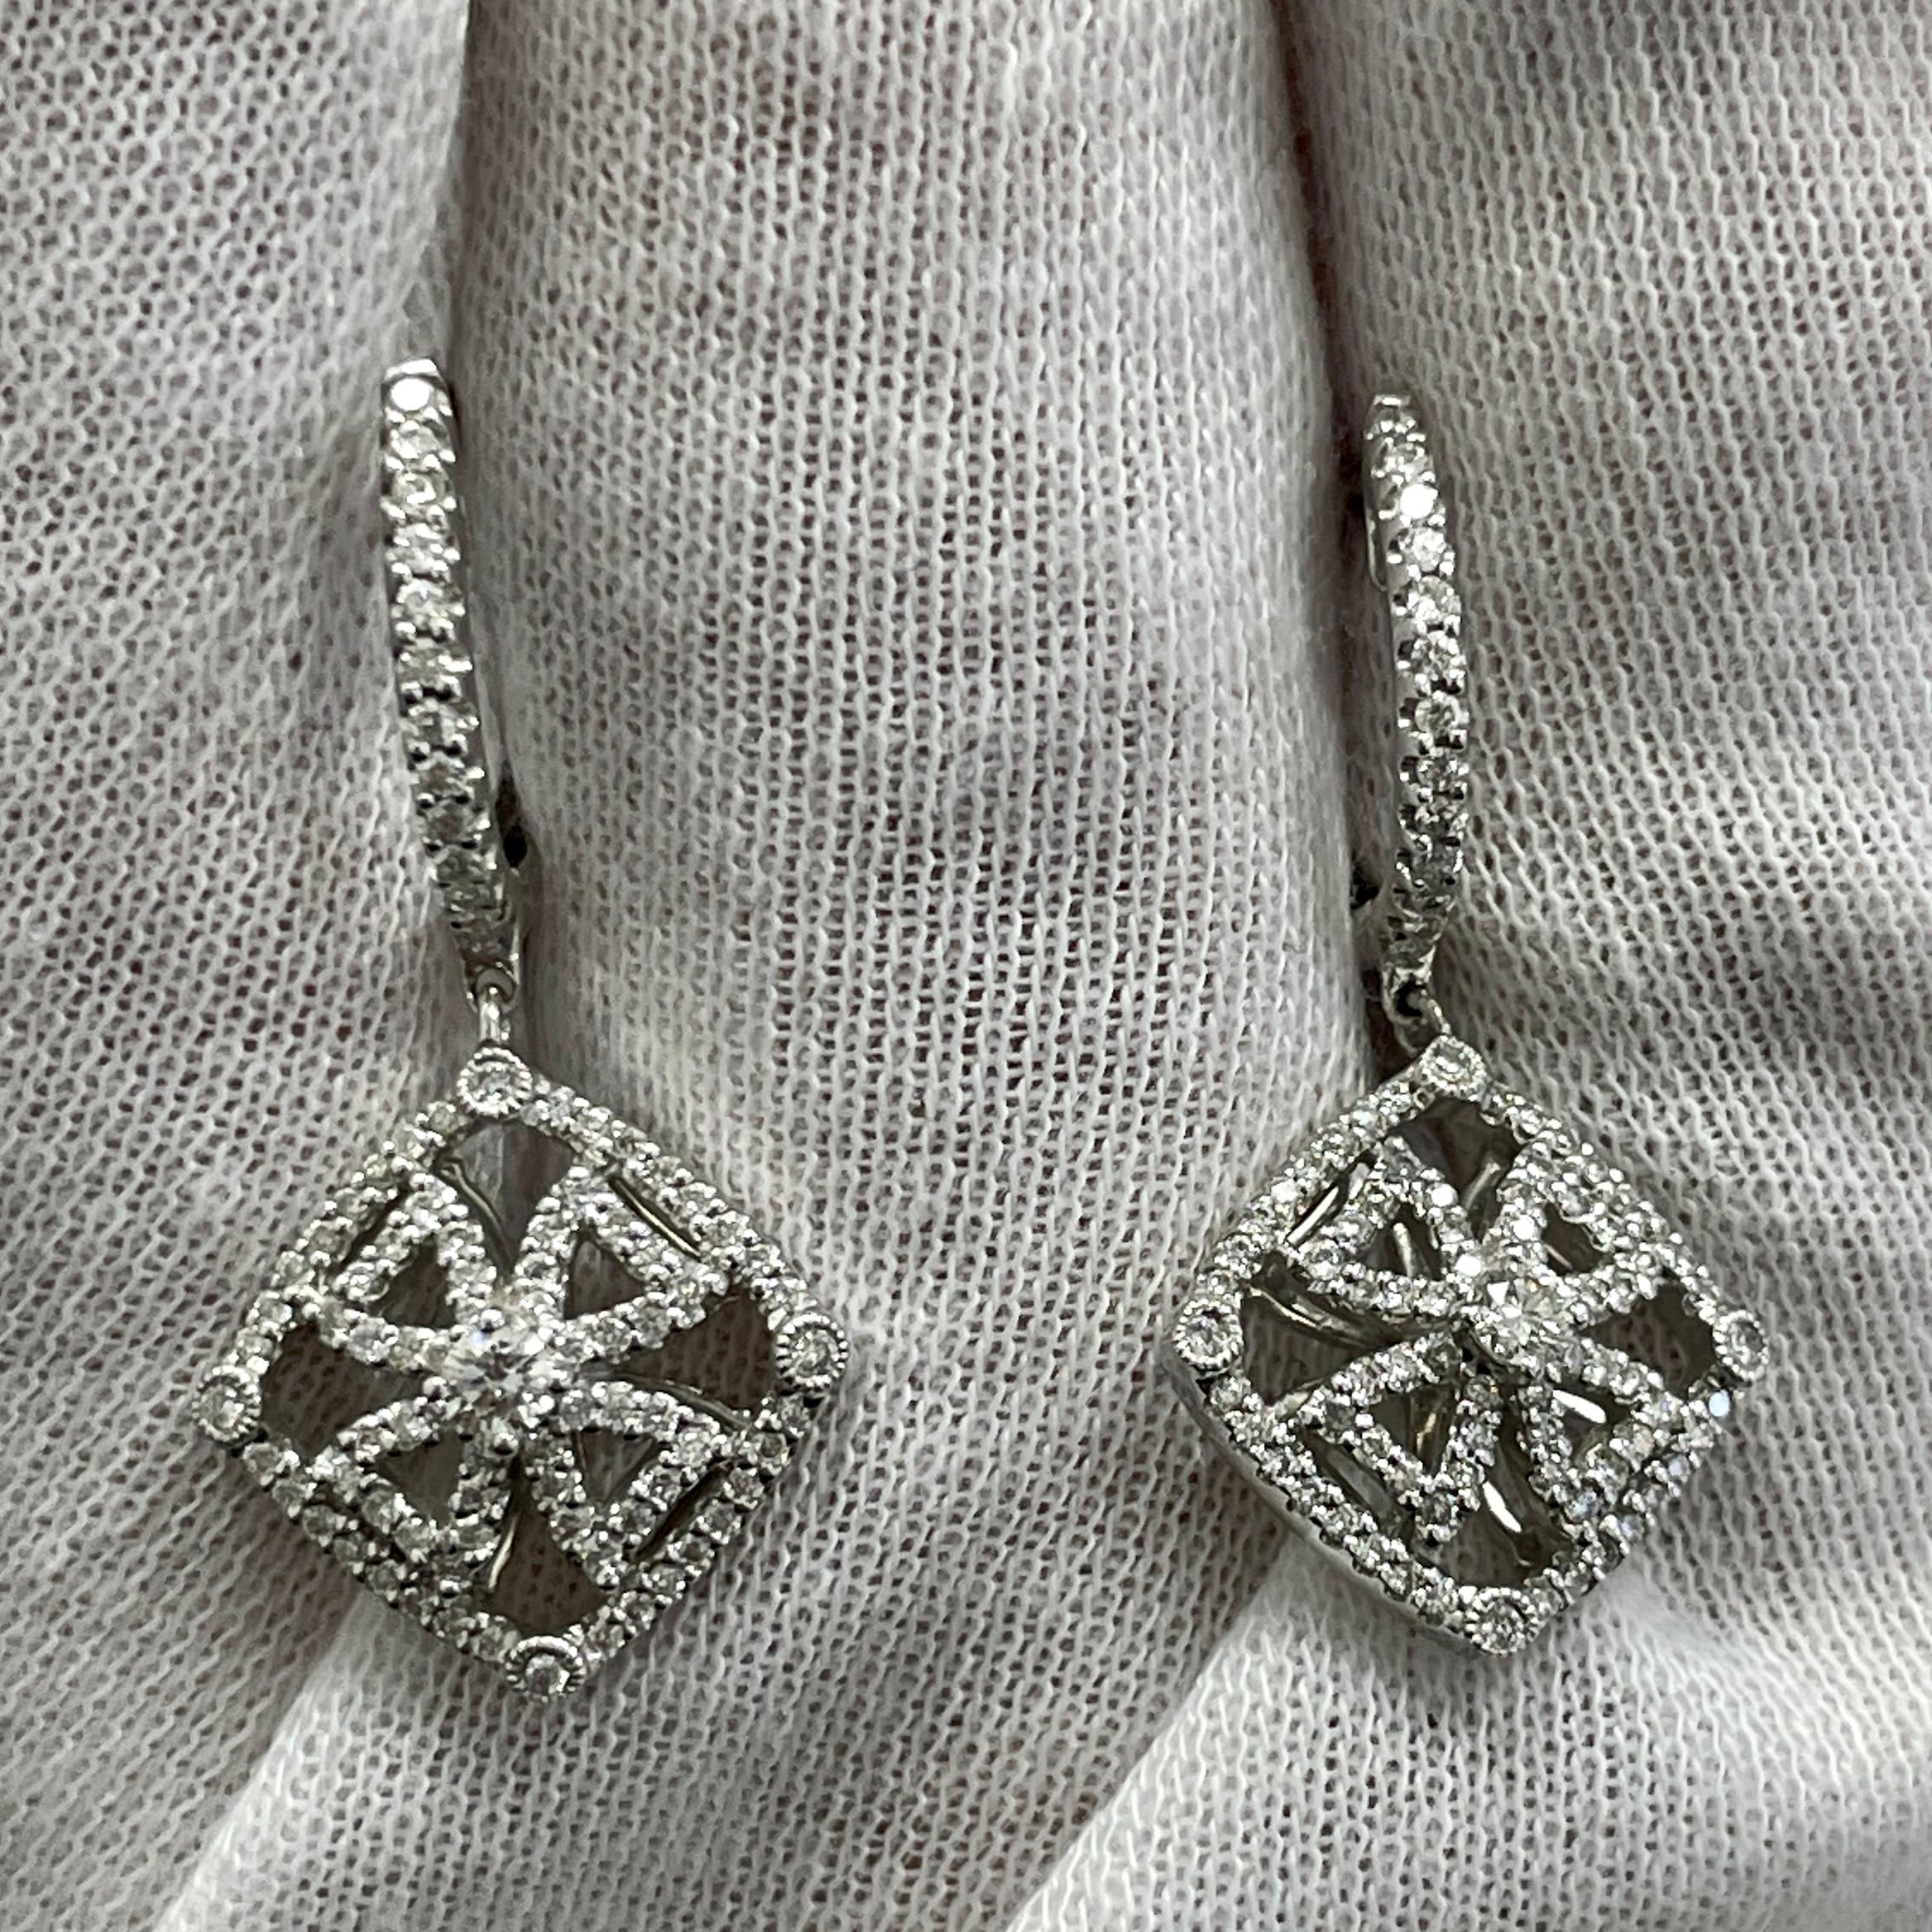 These elegant 18K white gold dangling earrings carry 0.68Ct of brilliant white diamonds